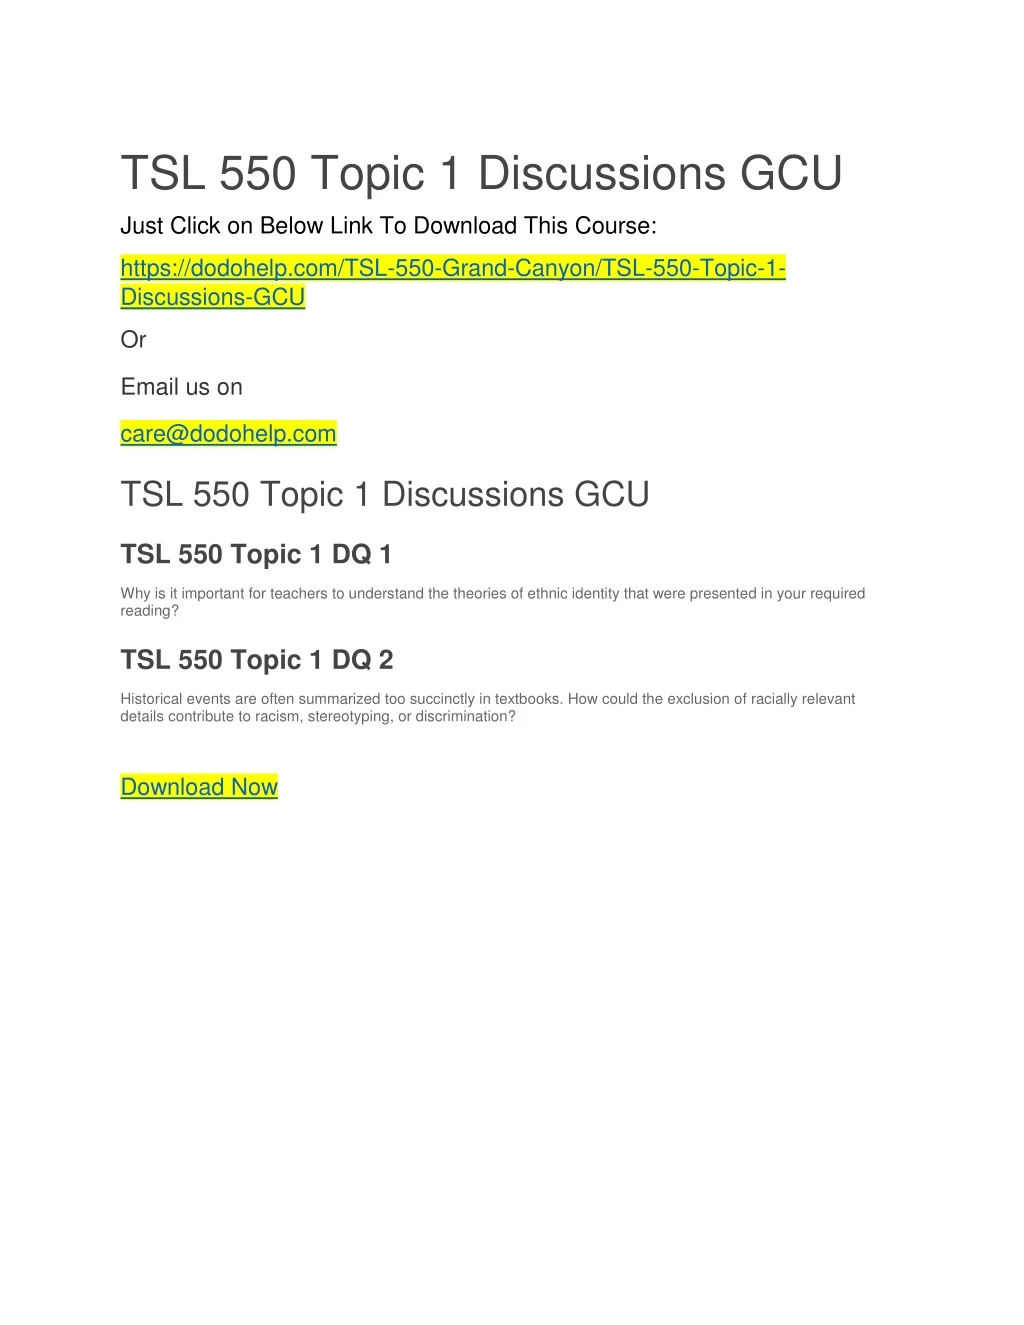 tsl 550 topic 1 discussions gcu just click